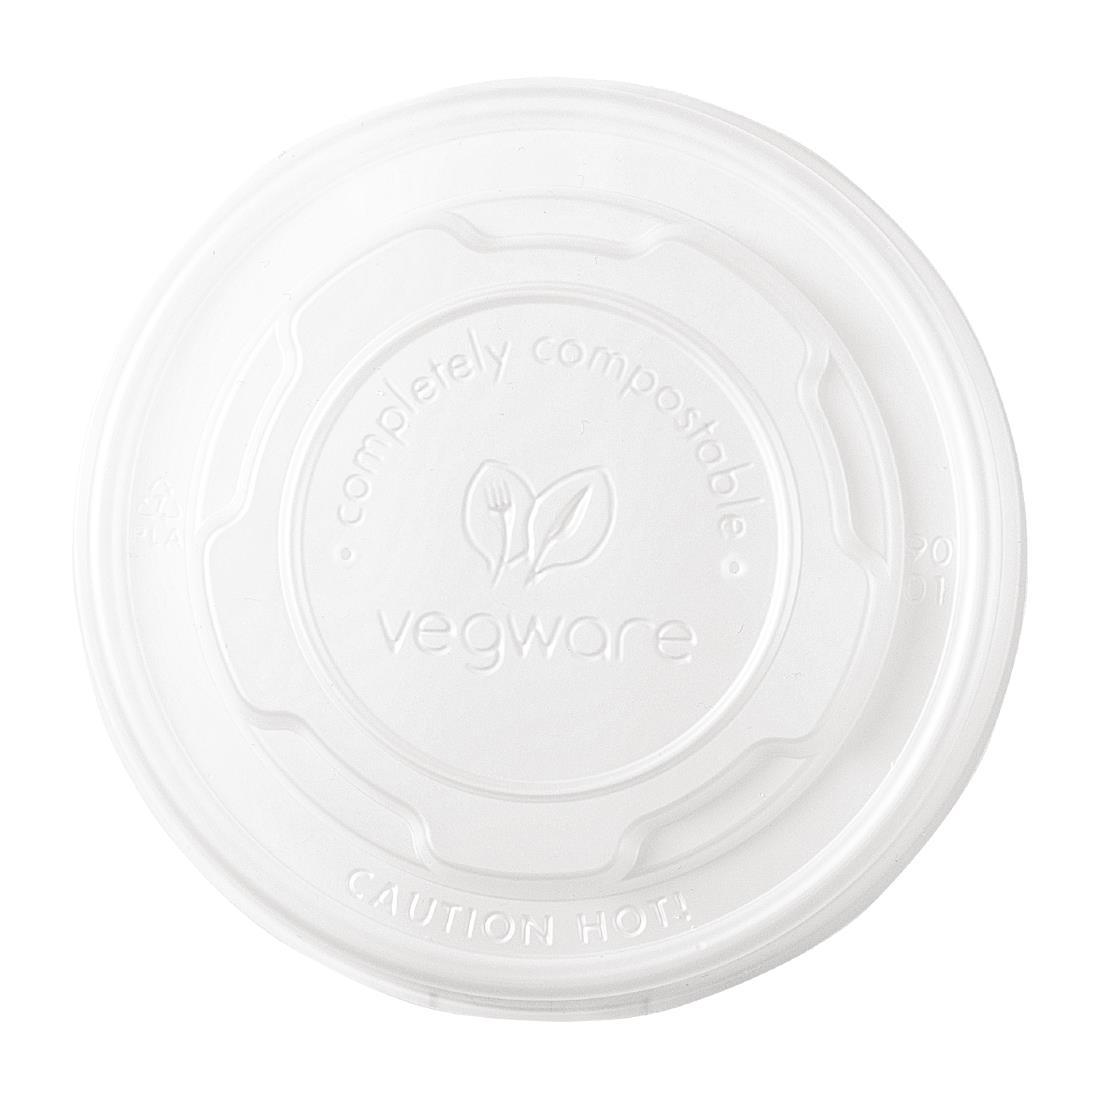 Vegware Compostable Hot Food Pot Flat Lids 170ml / 6oz and 230ml / 8oz - GH166  - 1